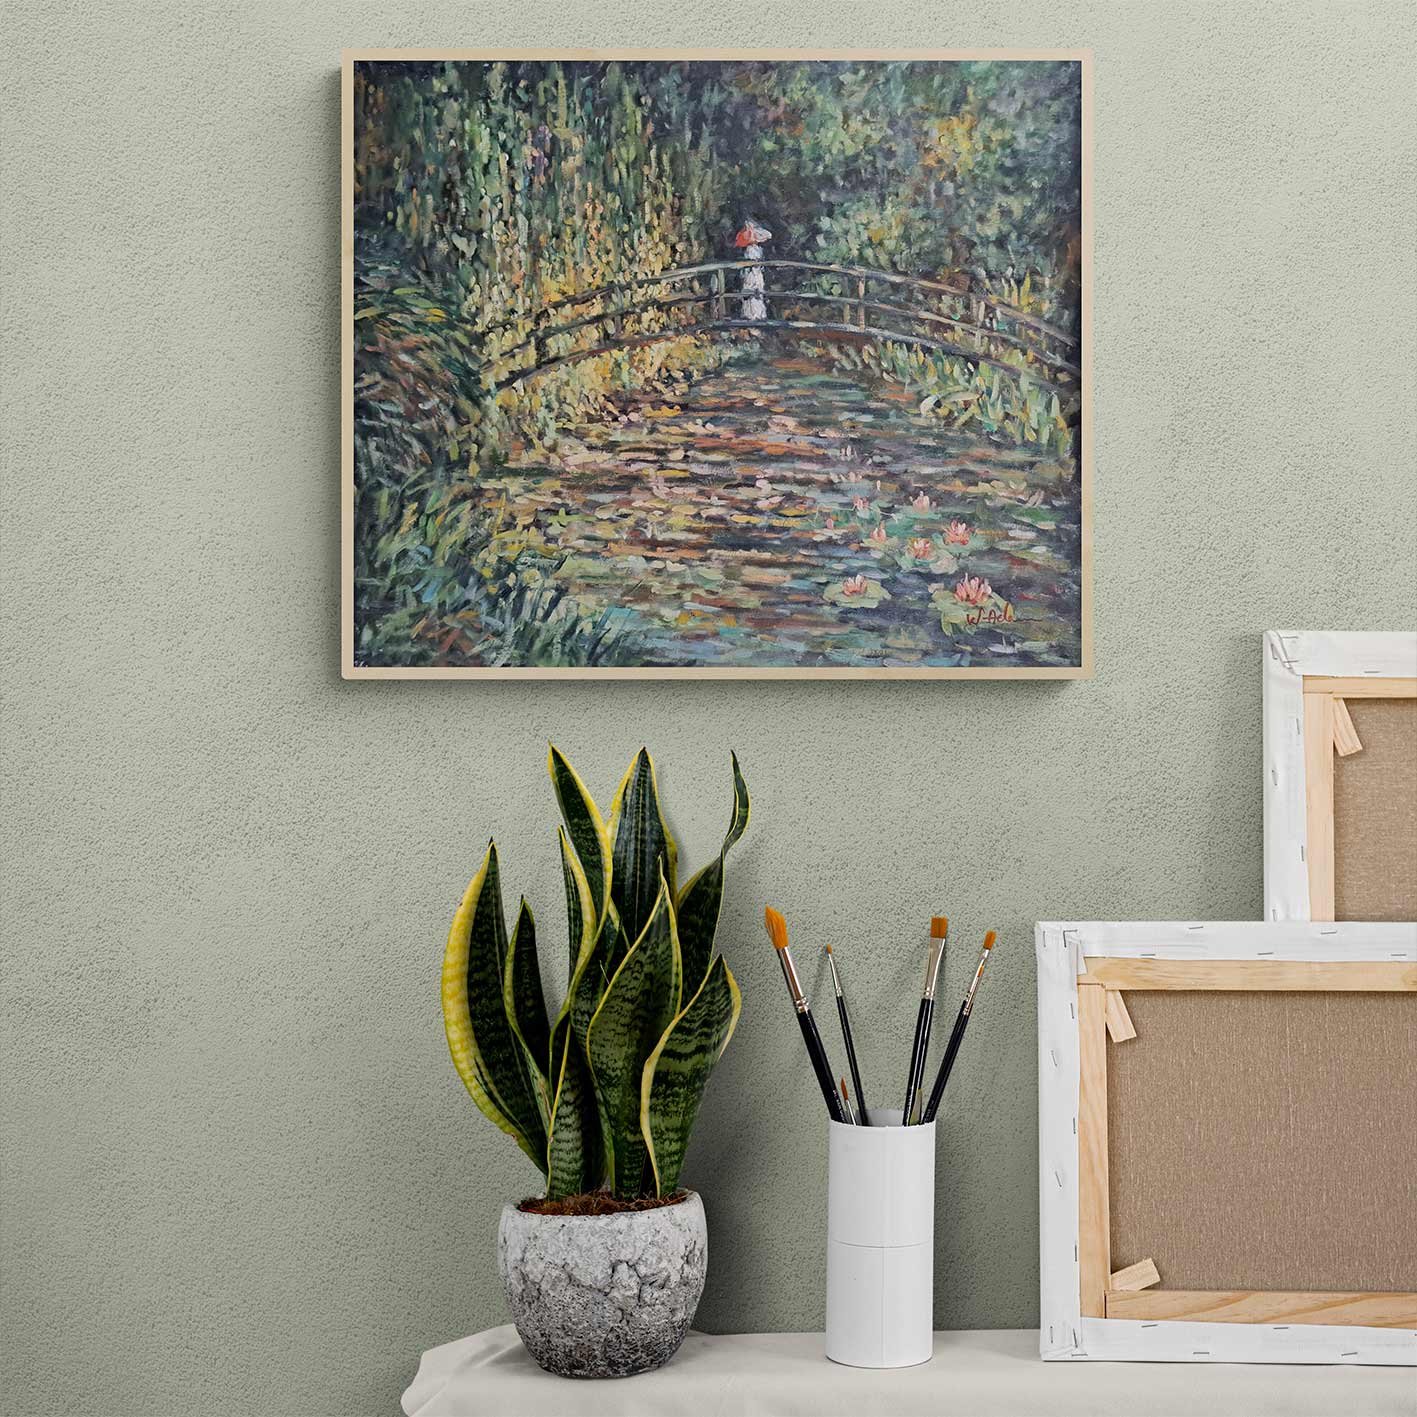 Nymphea Monet Pond Painting 60x50 cm